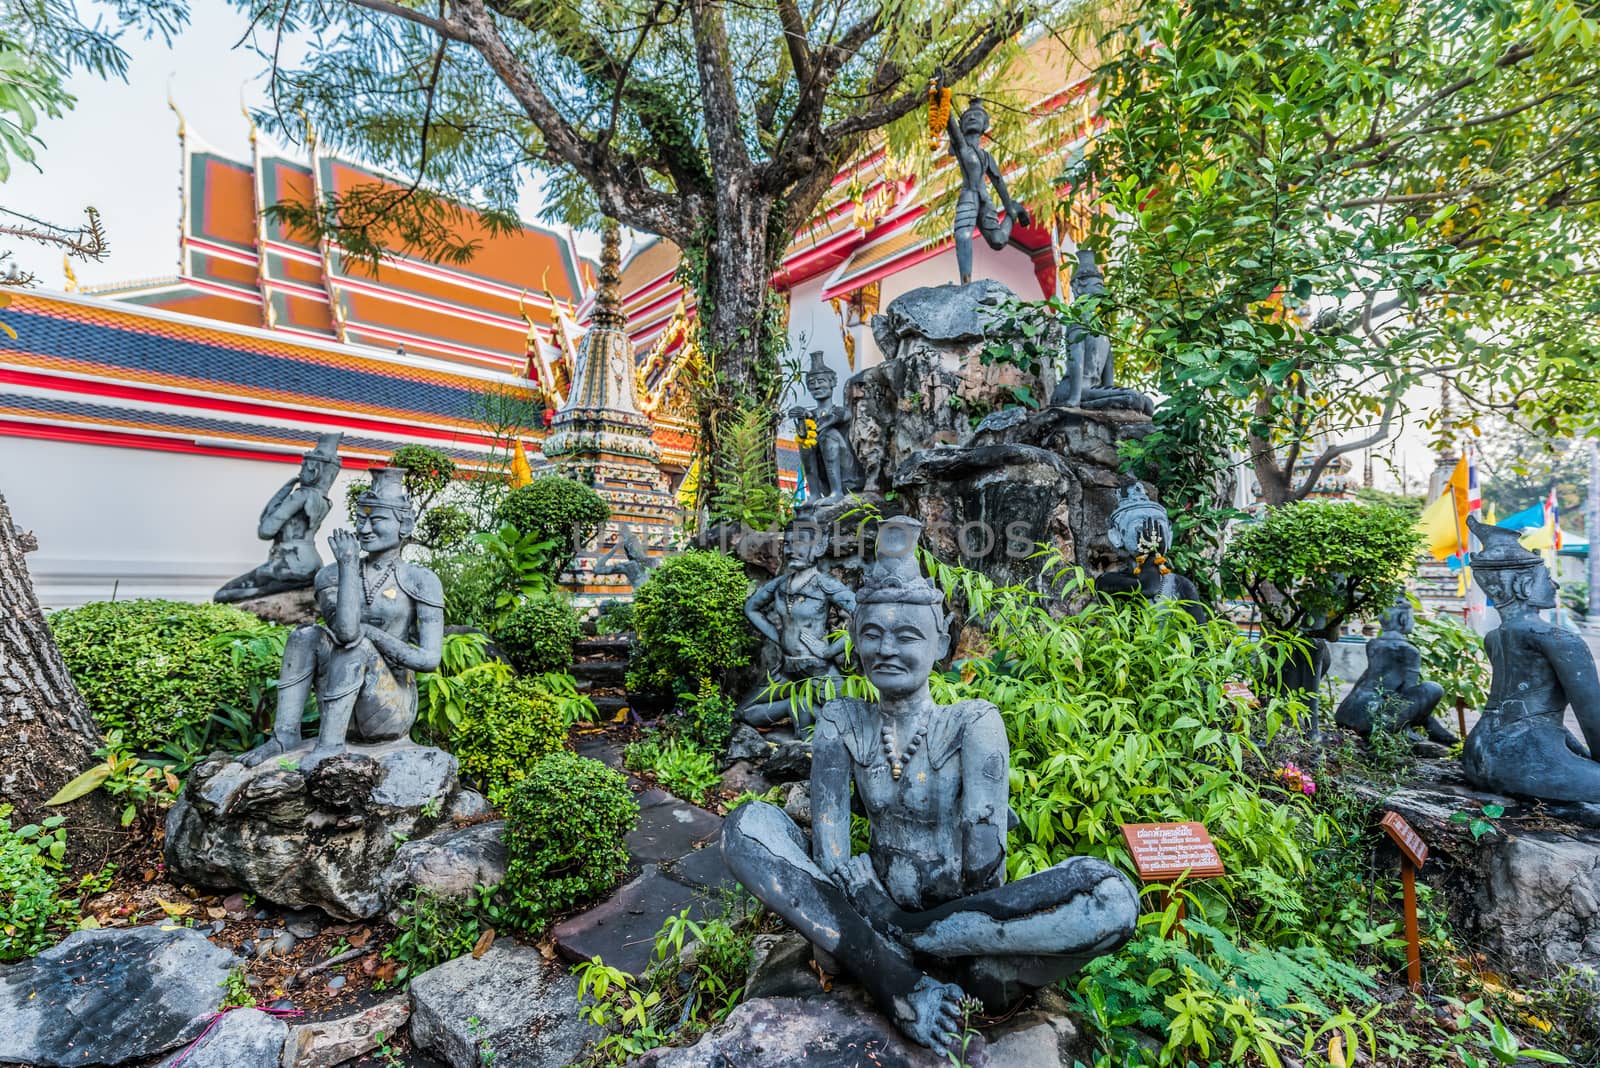 garden statues Wat Pho temple bangkok Thailand by PIXSTILL